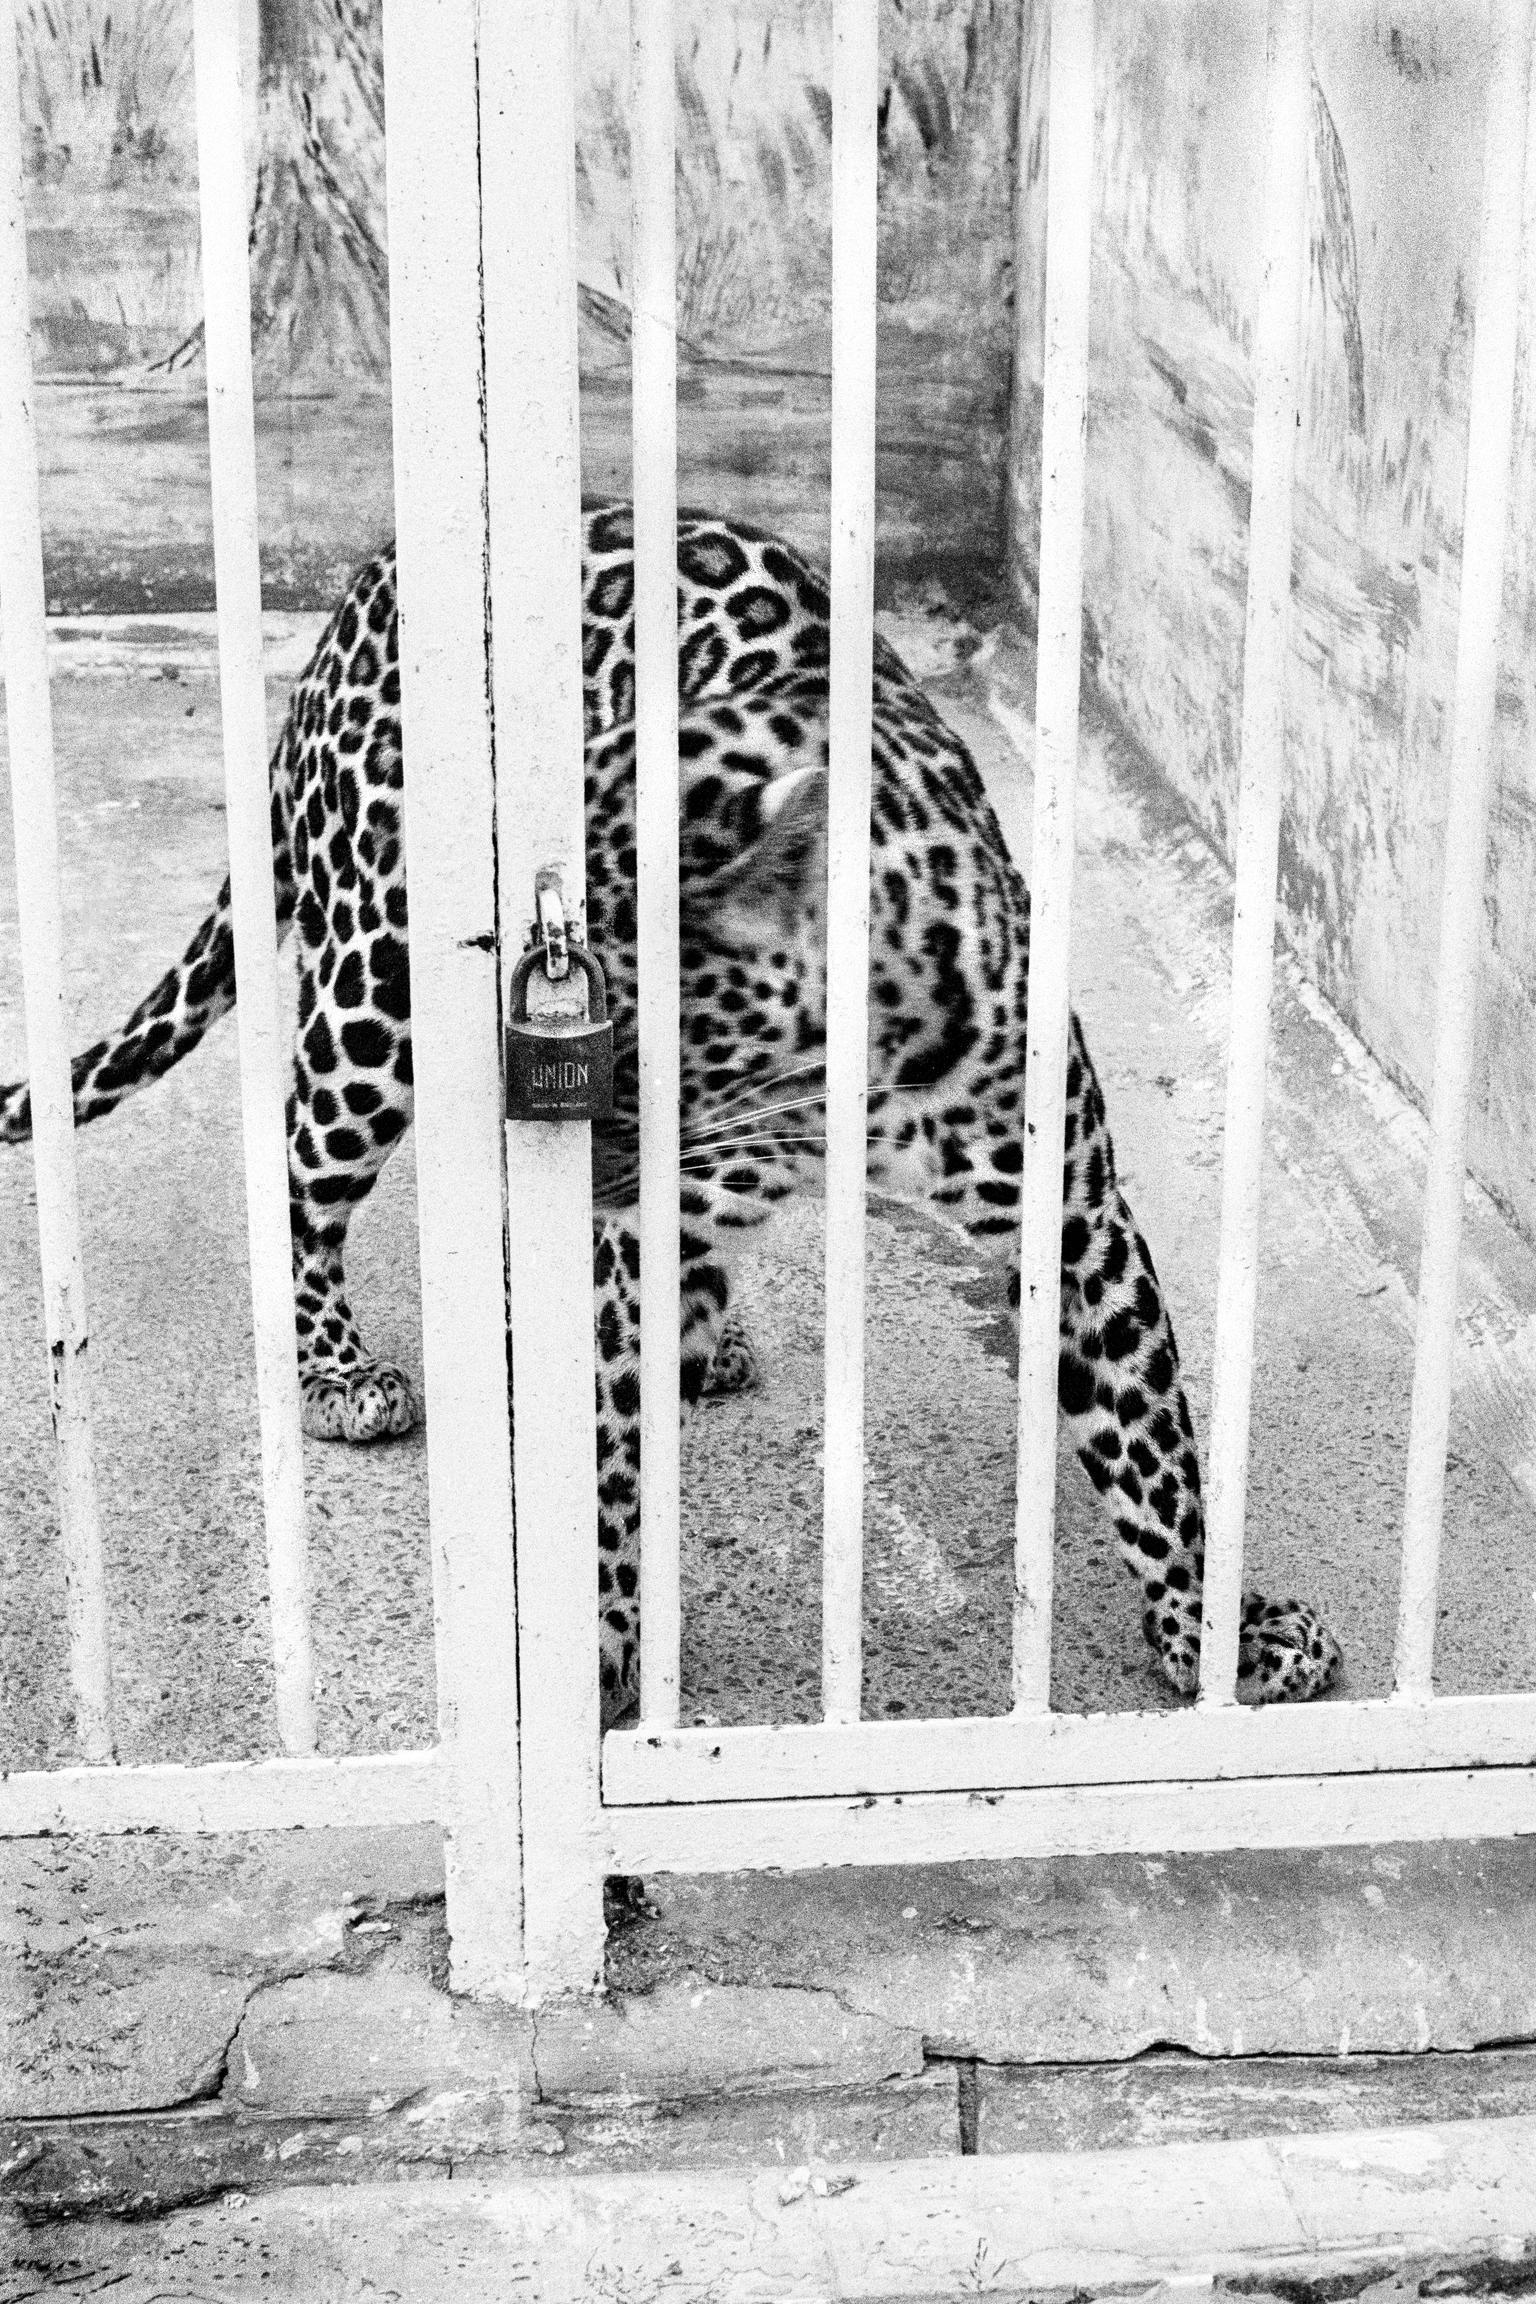 Locked in leopard in the zoo. Barry, Wales